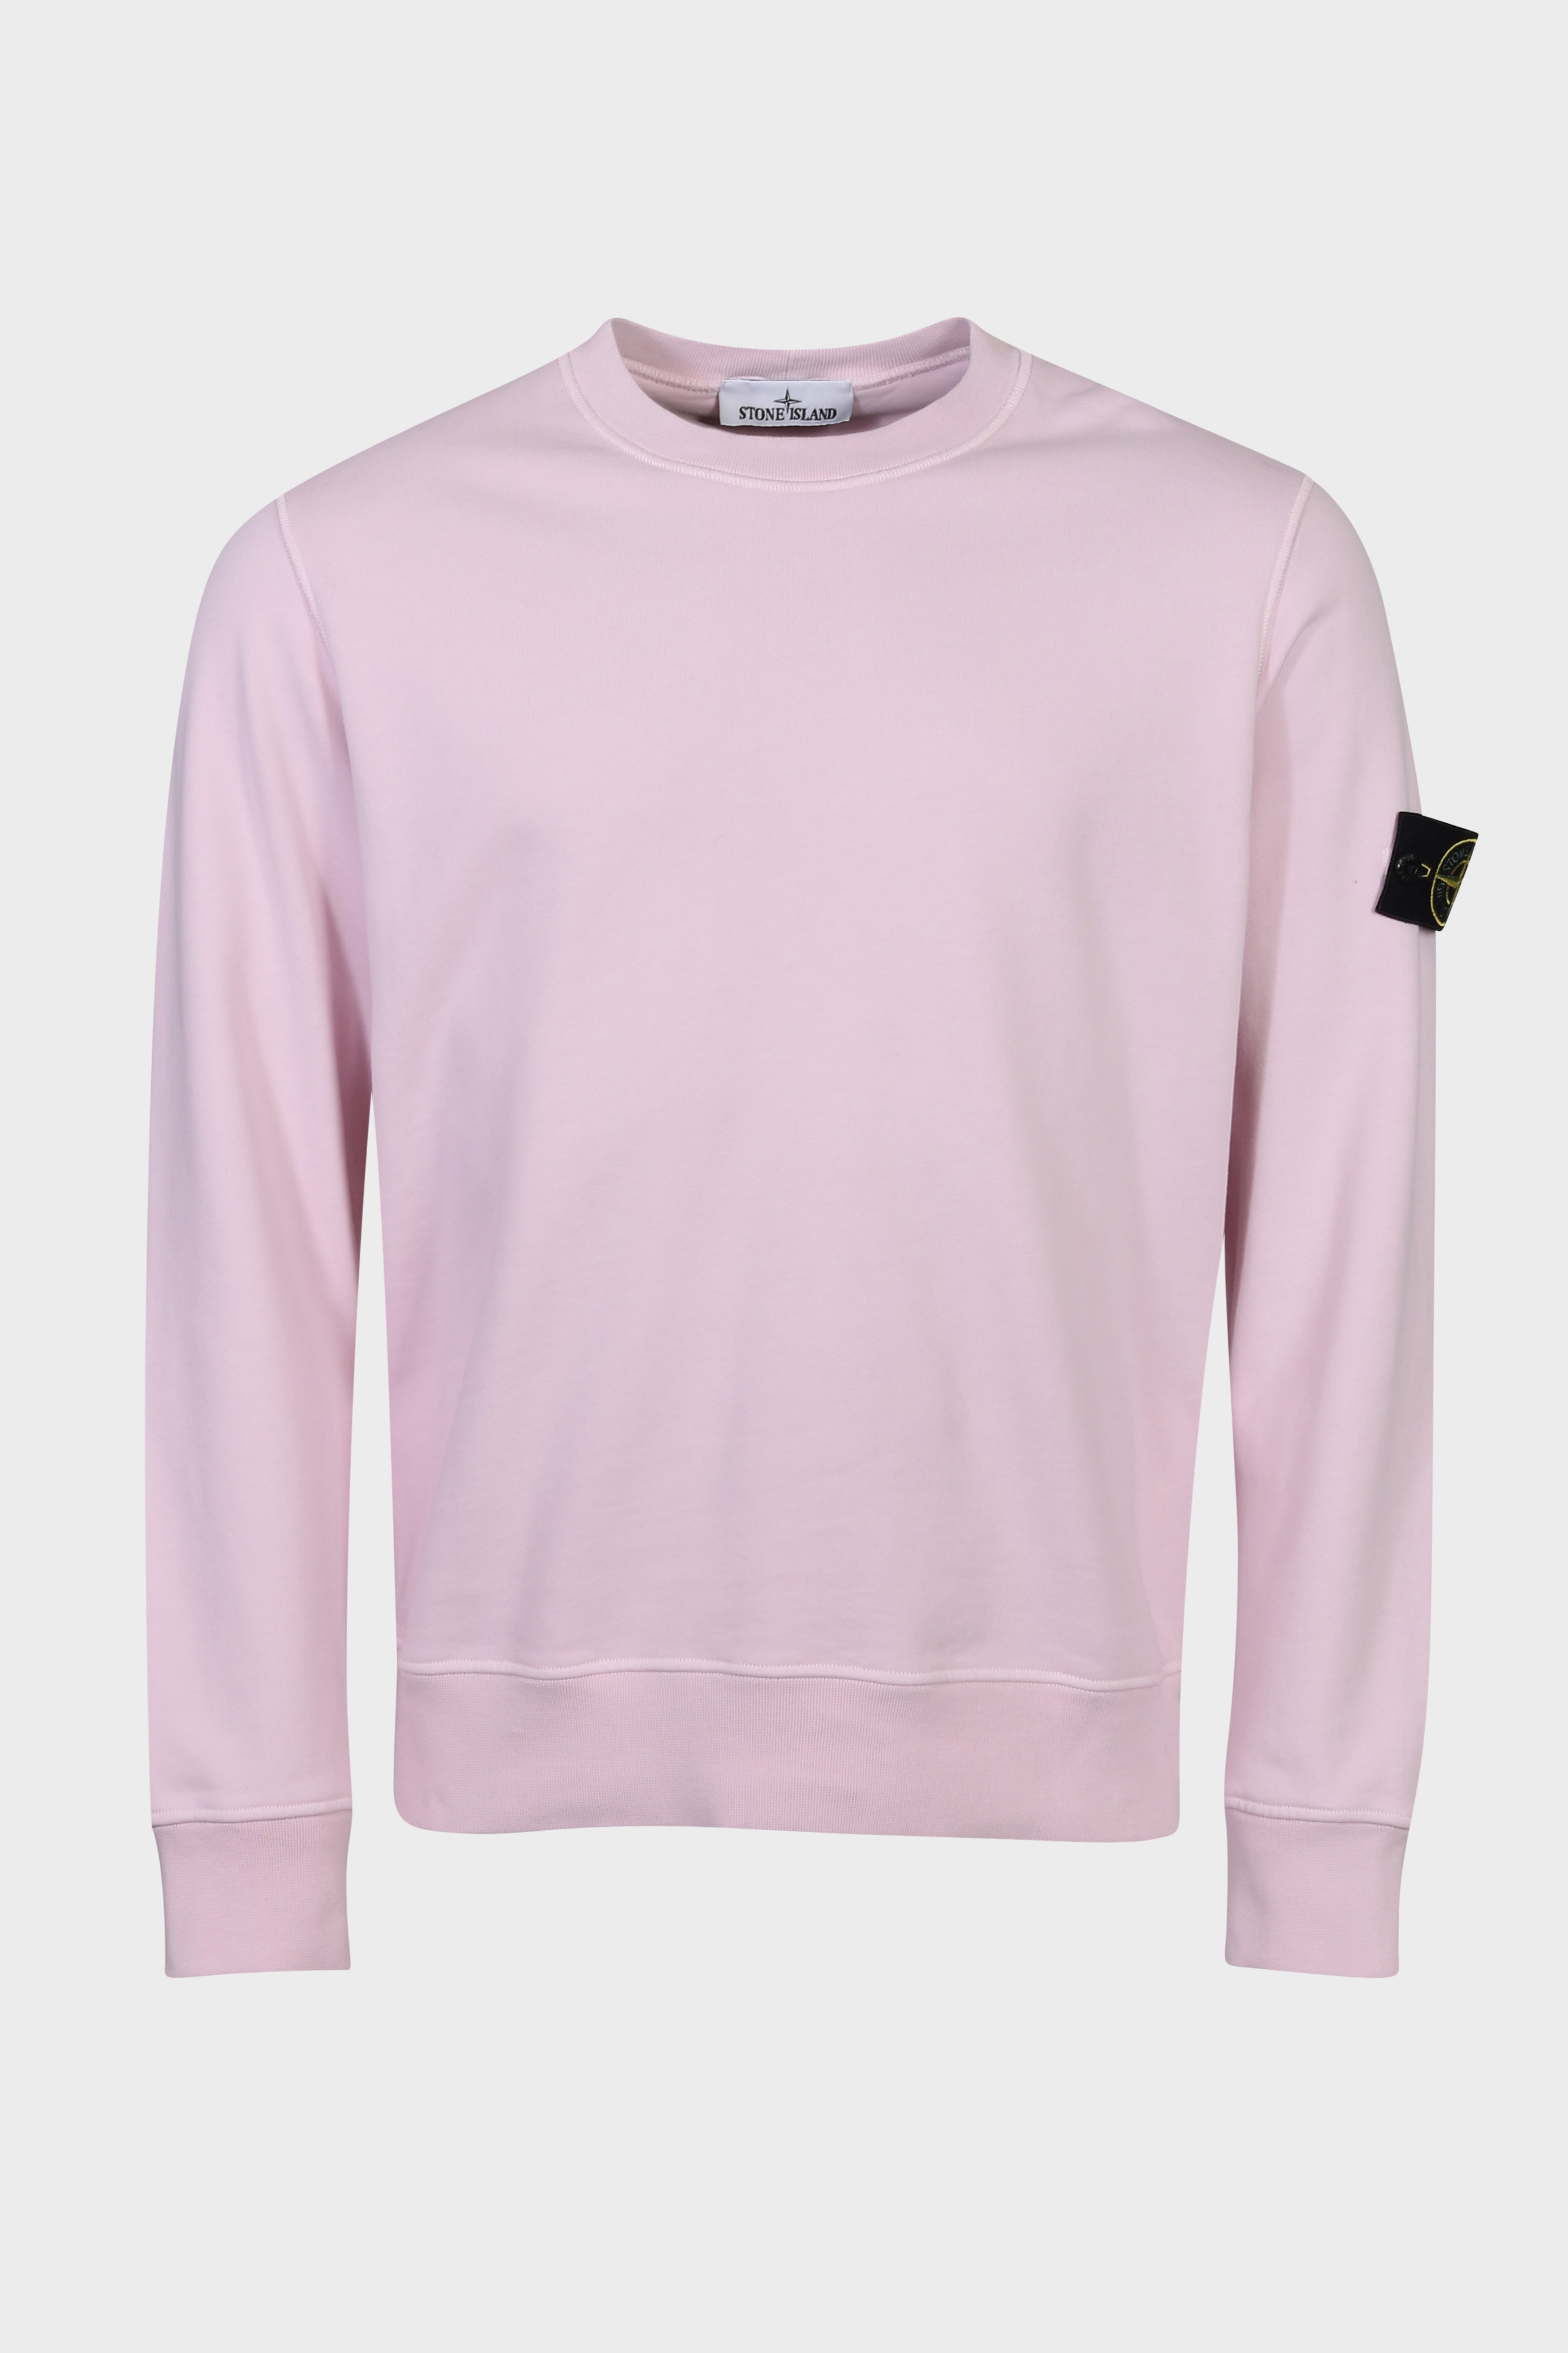 STONE ISLAND Sweatshirt in Light Pink S